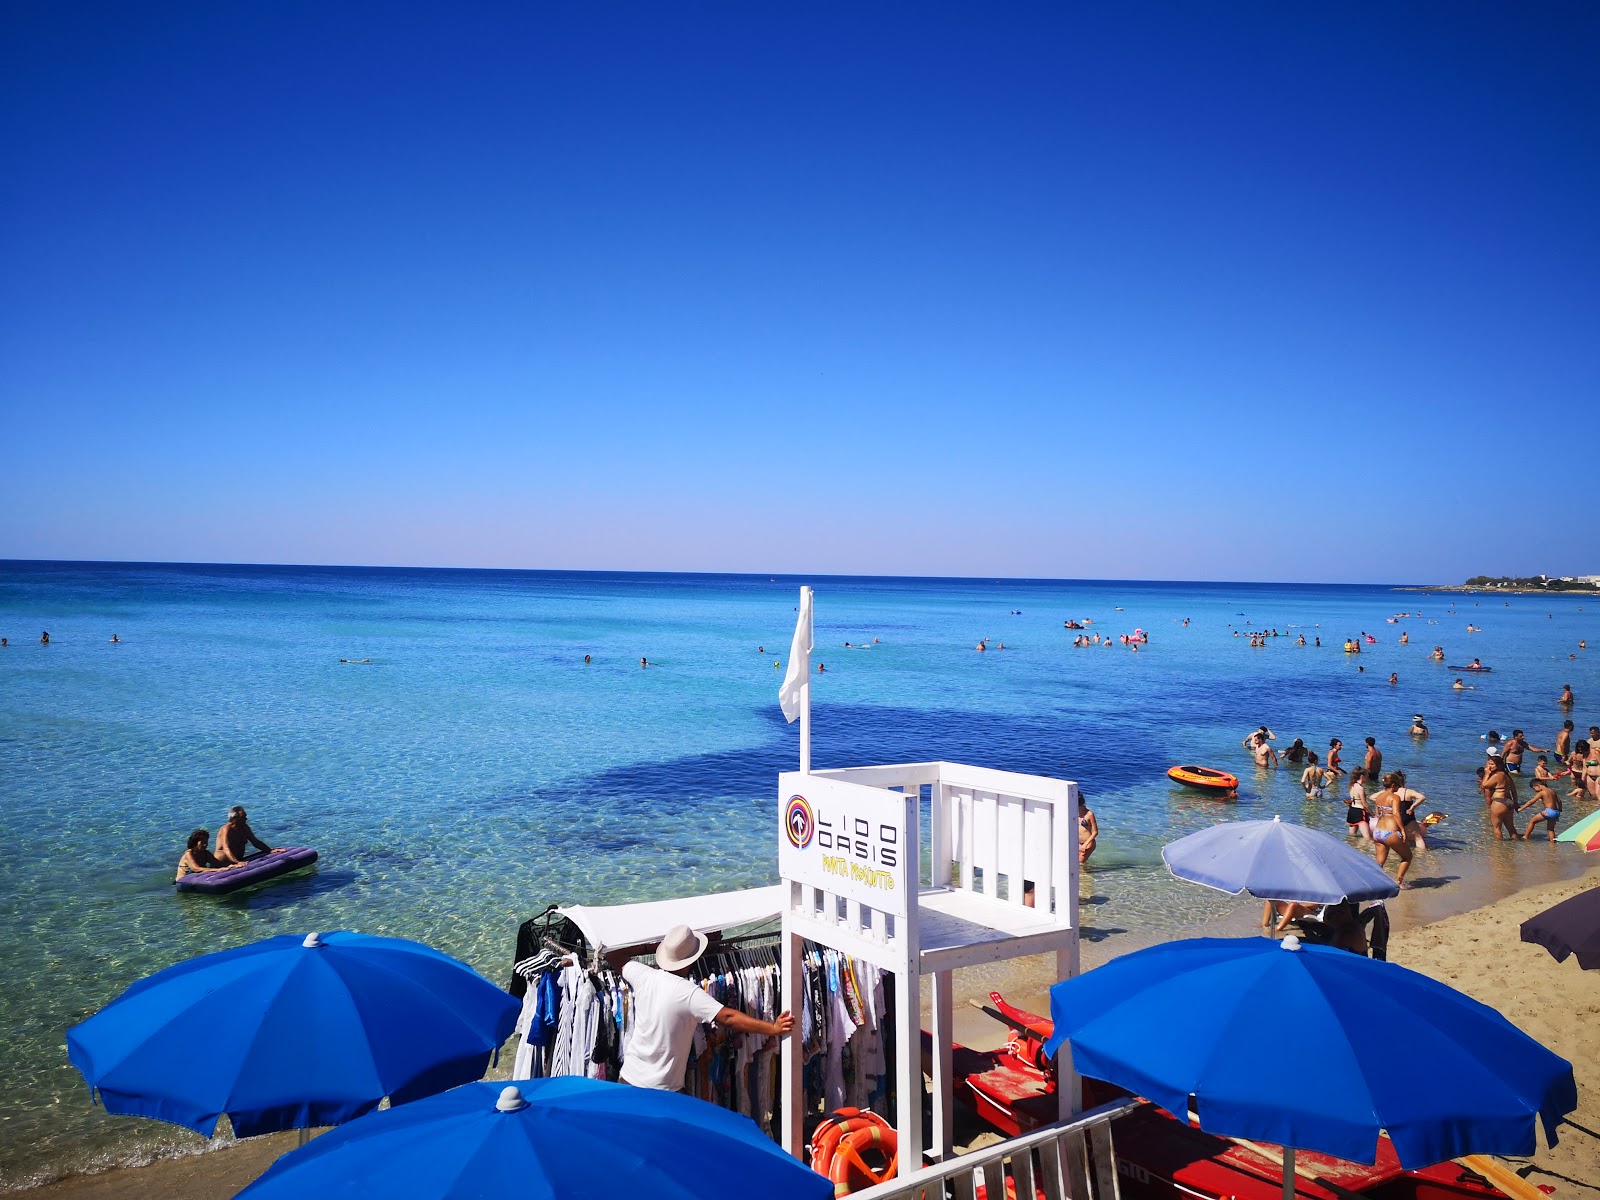 Foto de Spiaggia di Punta Prosciutto - lugar popular entre los conocedores del relax